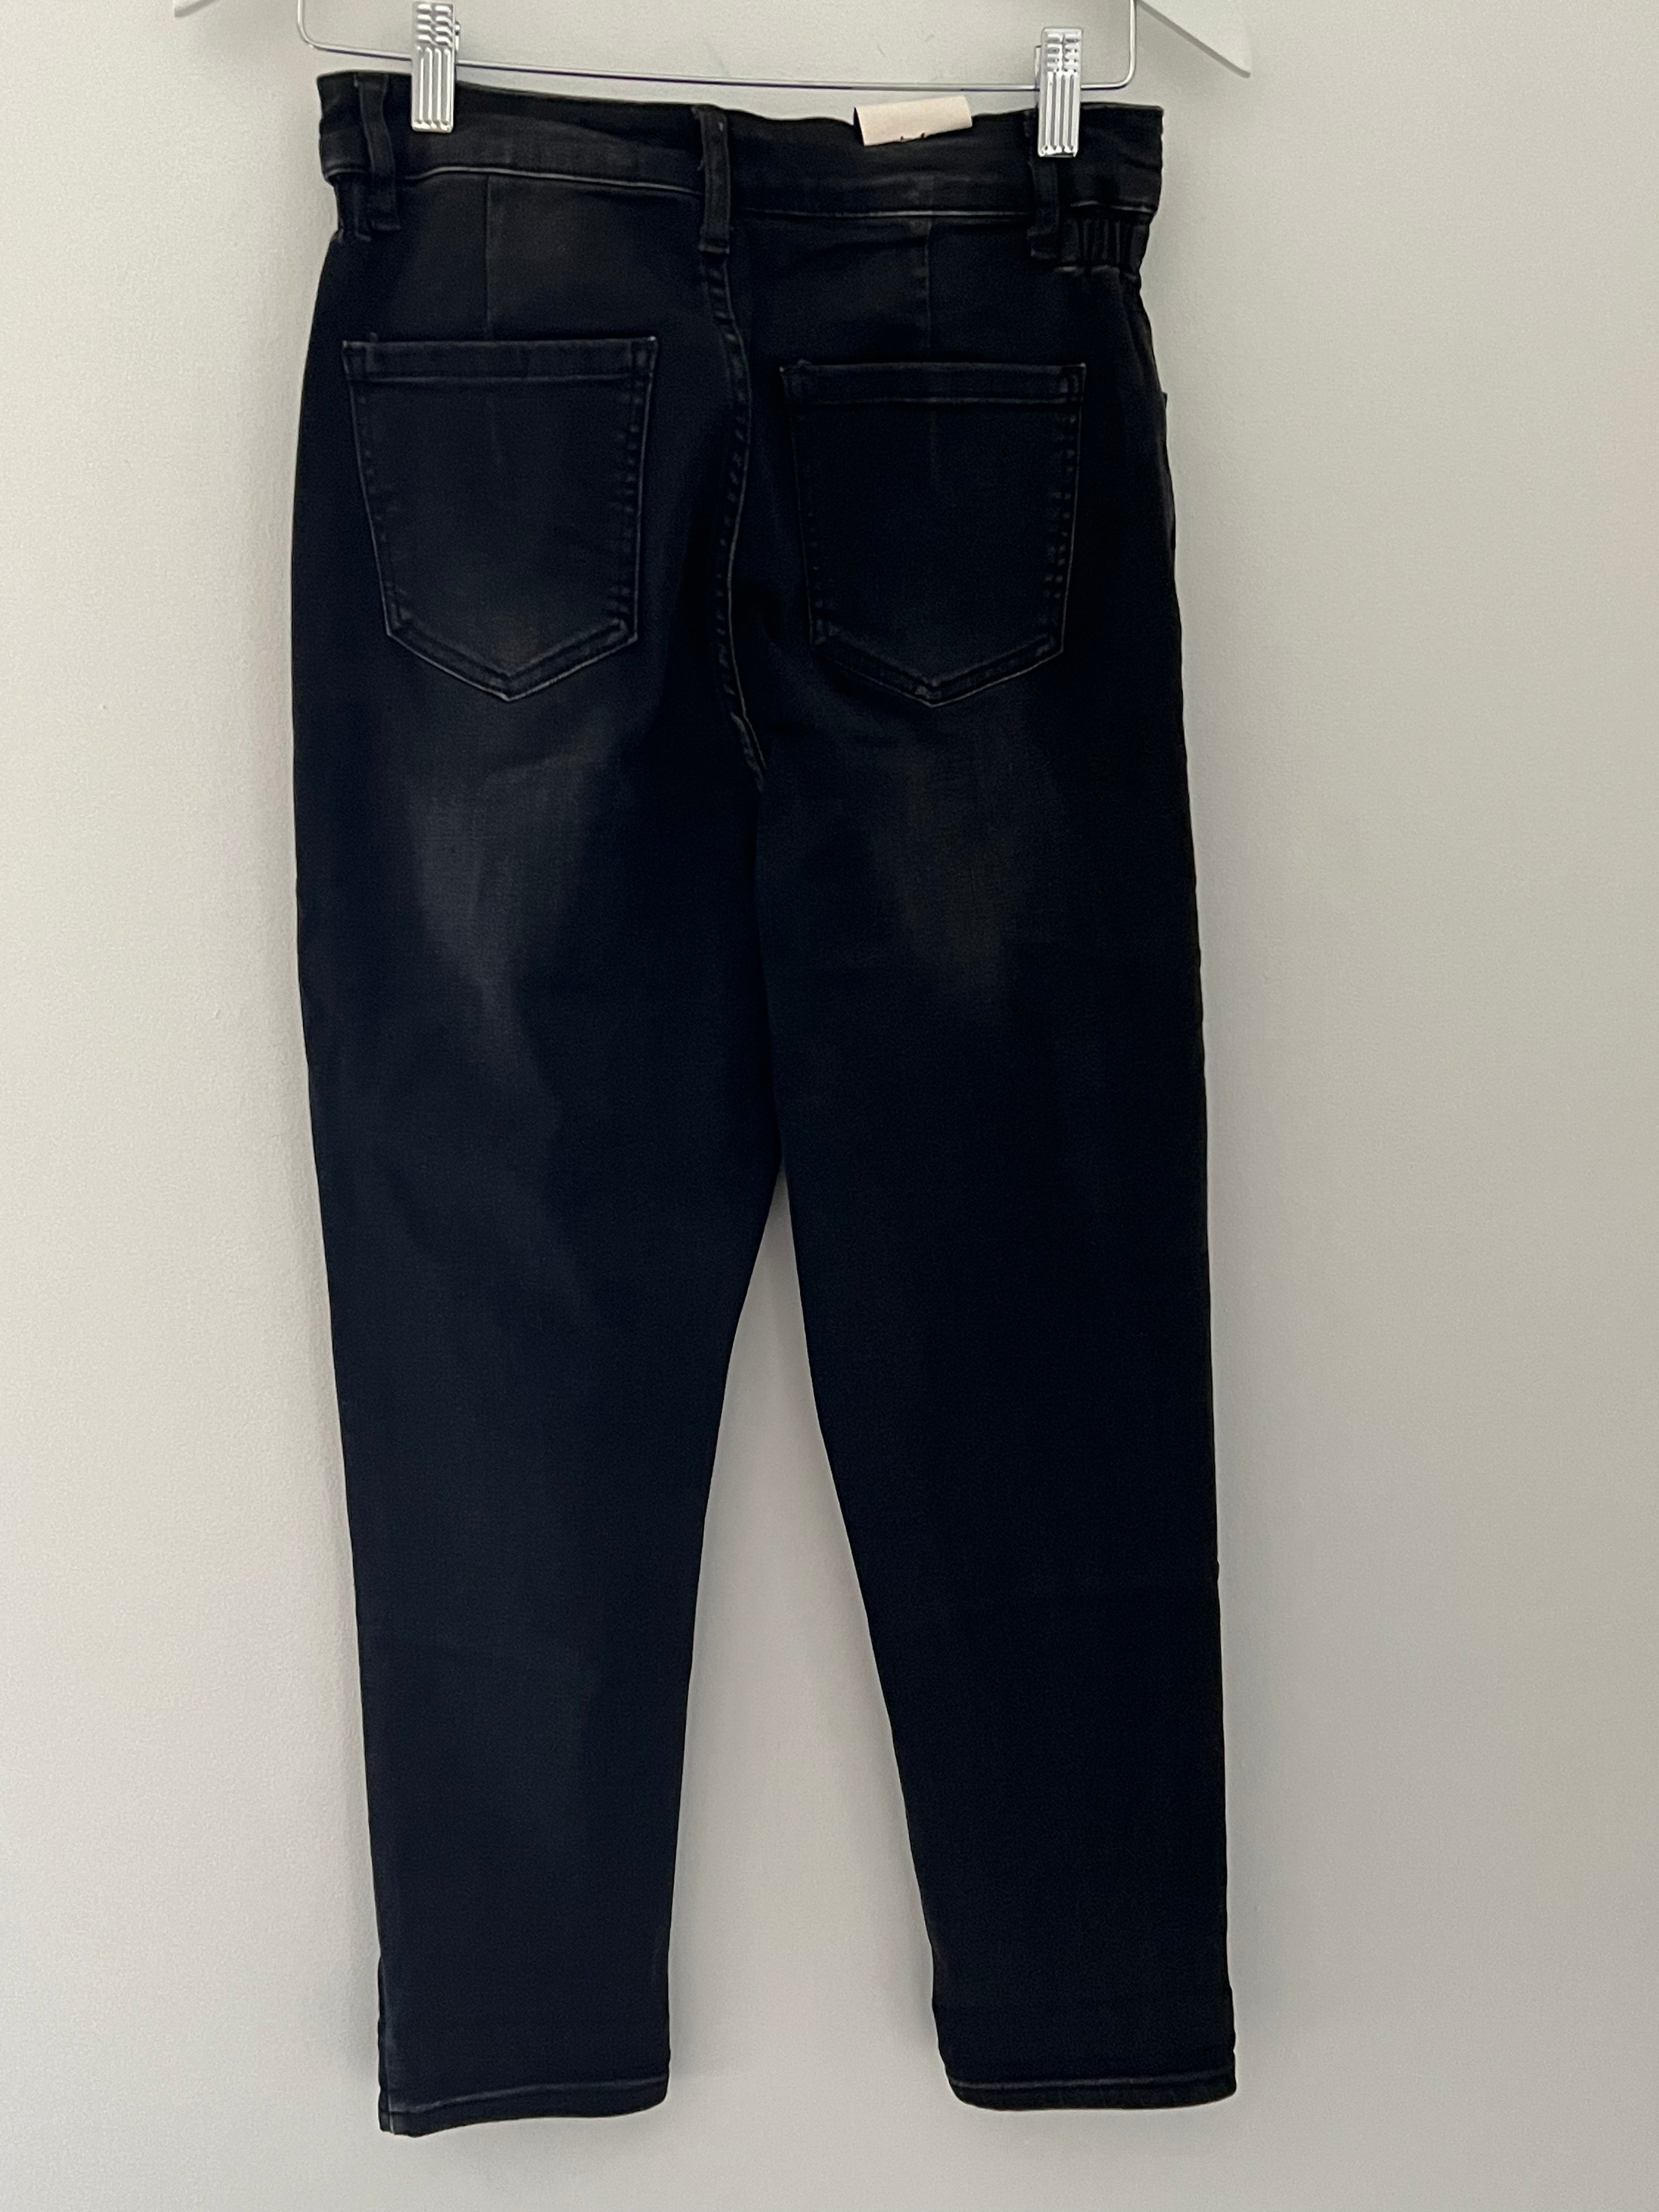 Slimfit Stretch Two Button Jeans in Black Denim